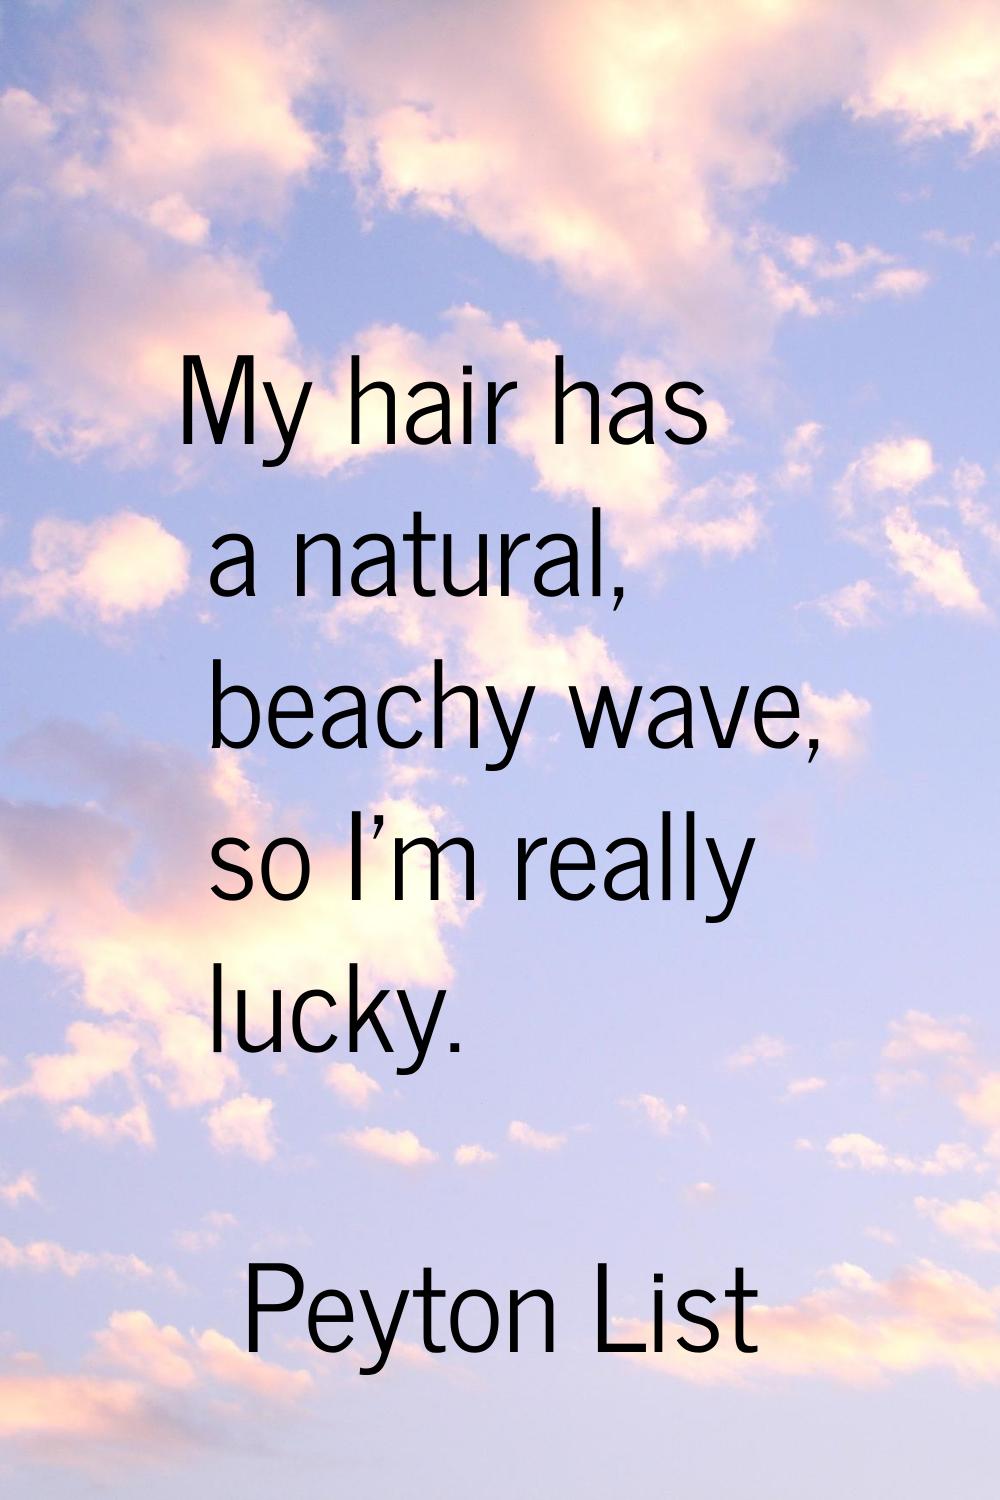 My hair has a natural, beachy wave, so I'm really lucky.